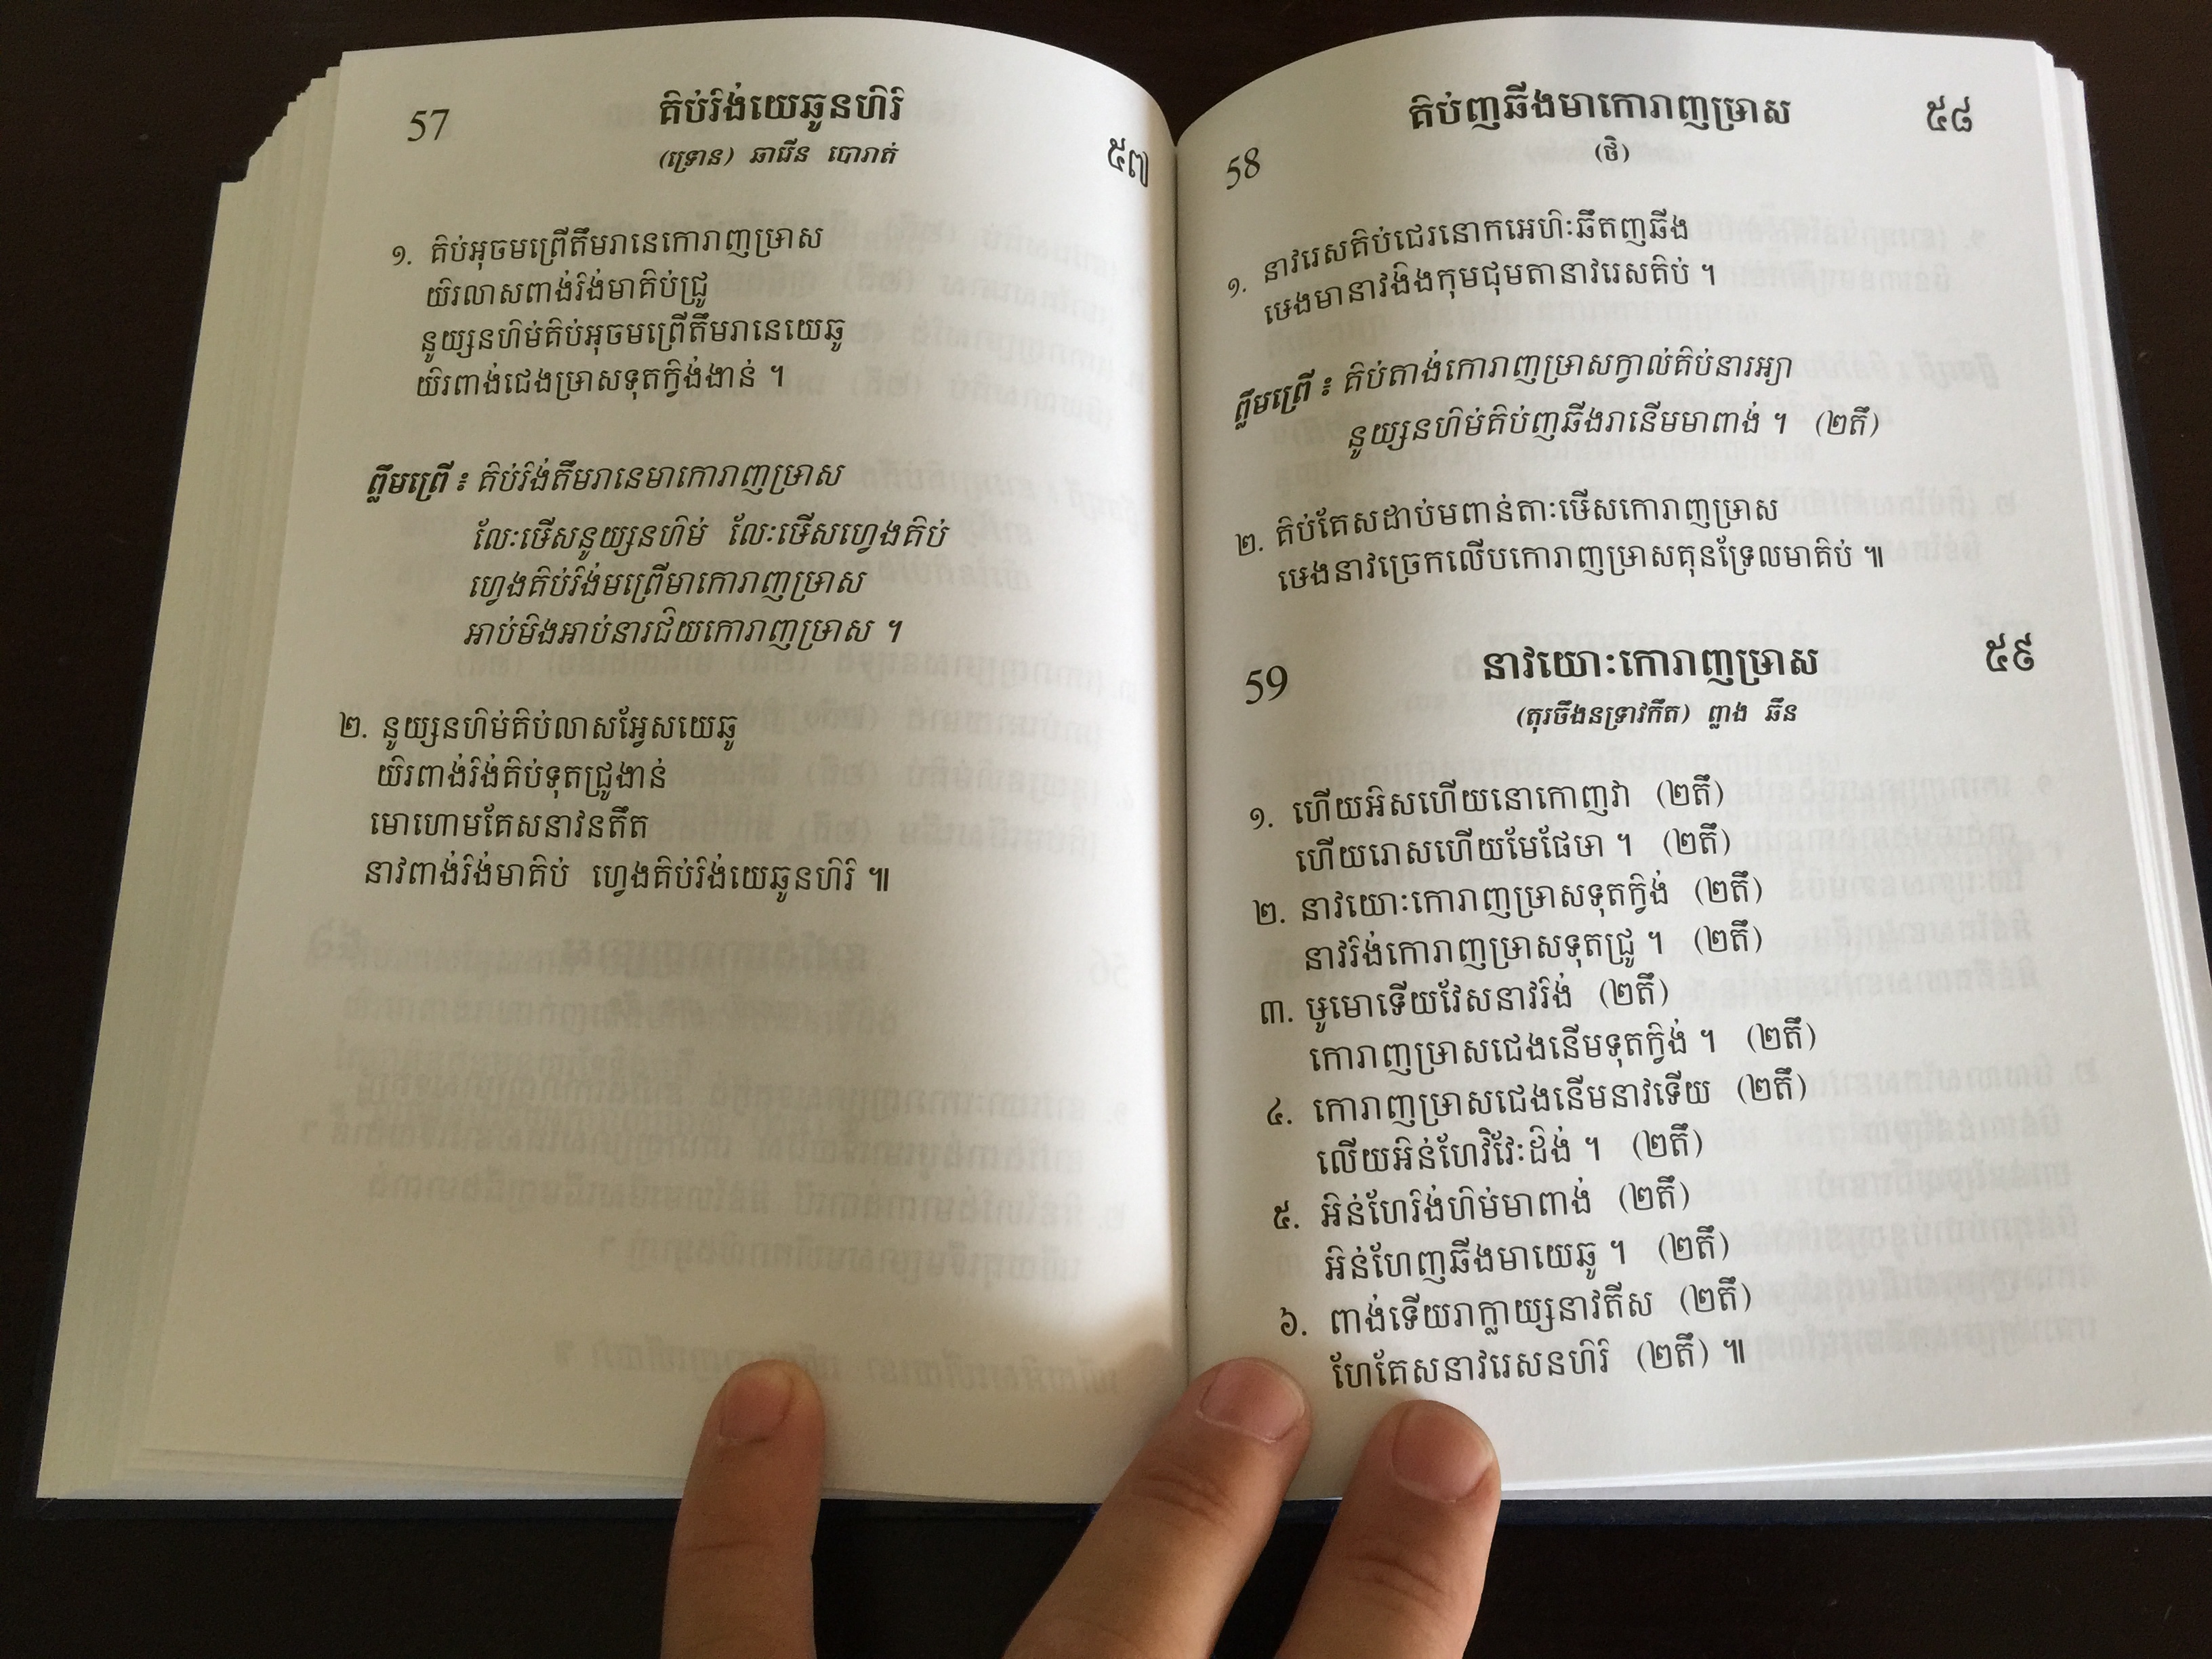 Bunong language Hymn book 1